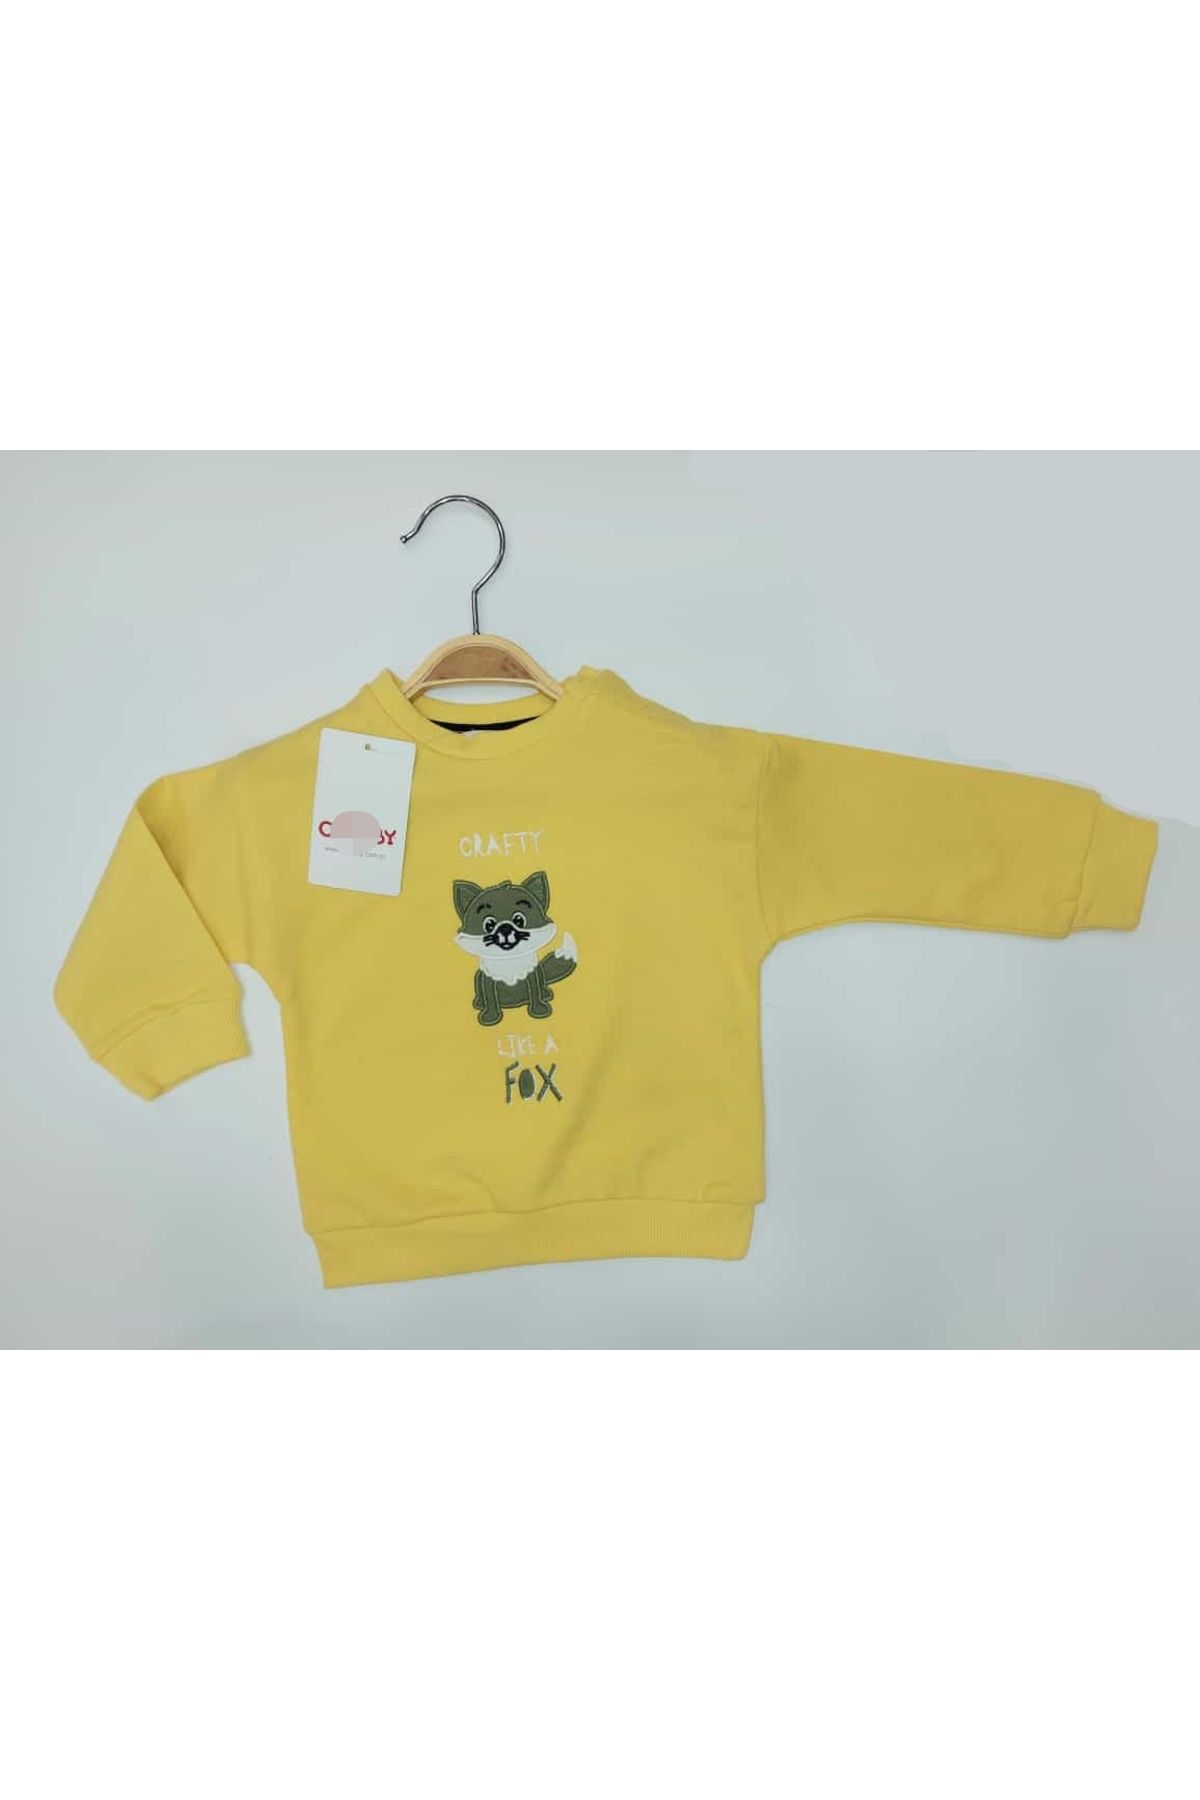 çikoby Grafty Fox nakışlı Sweatshirt